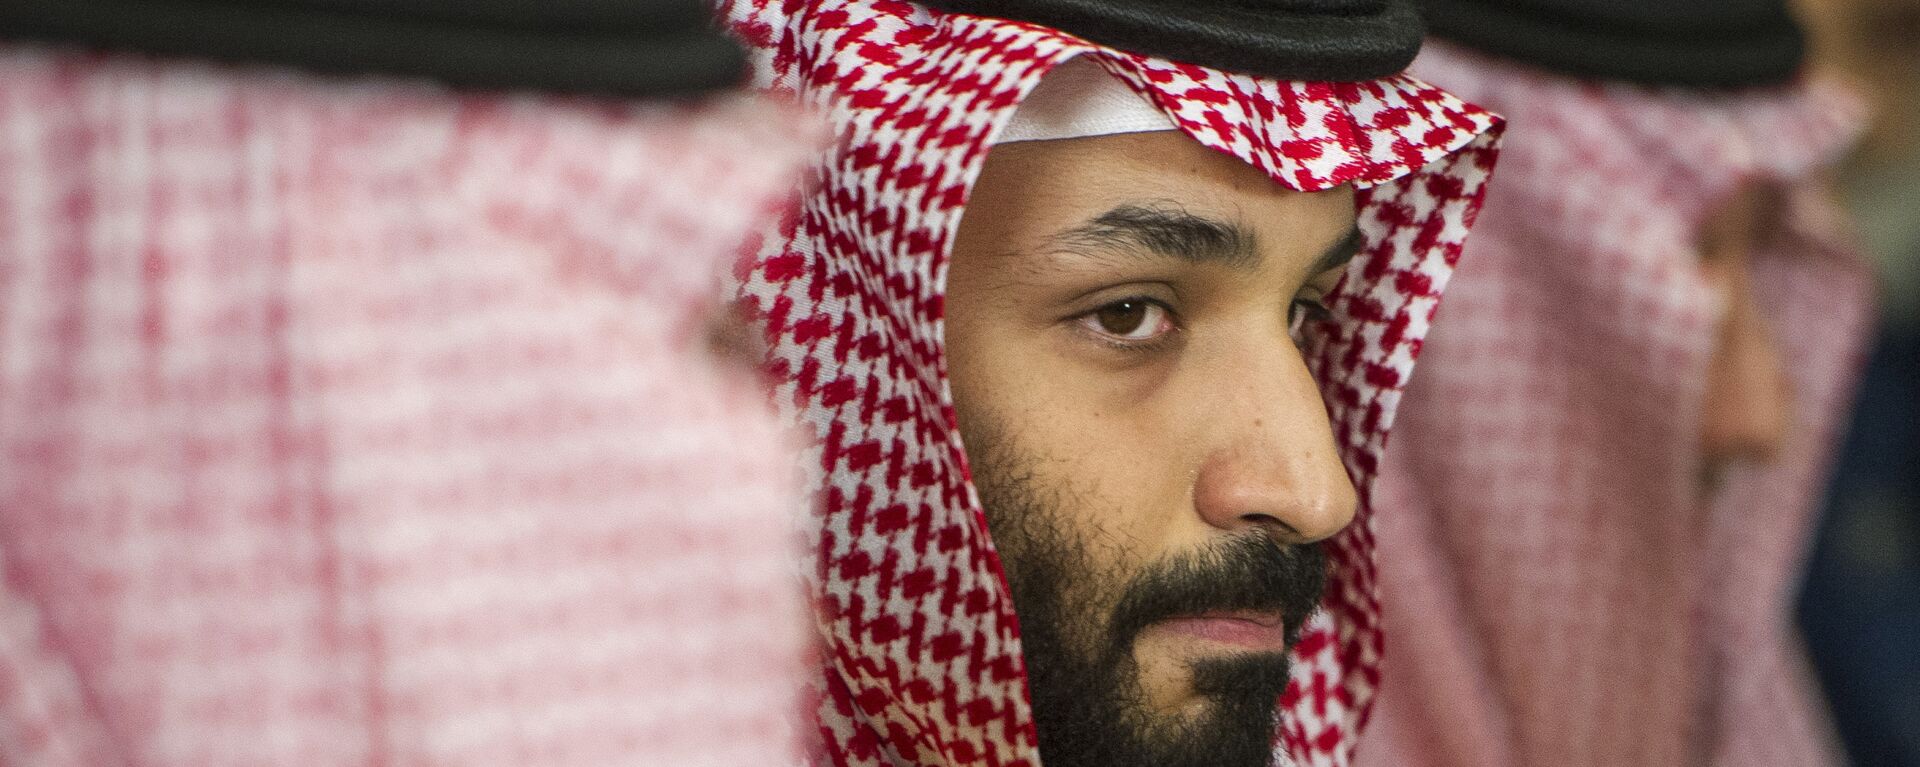 Mohamed bin Salman, príncipe heredero de Arabia Saudí - Sputnik Mundo, 1920, 01.03.2021